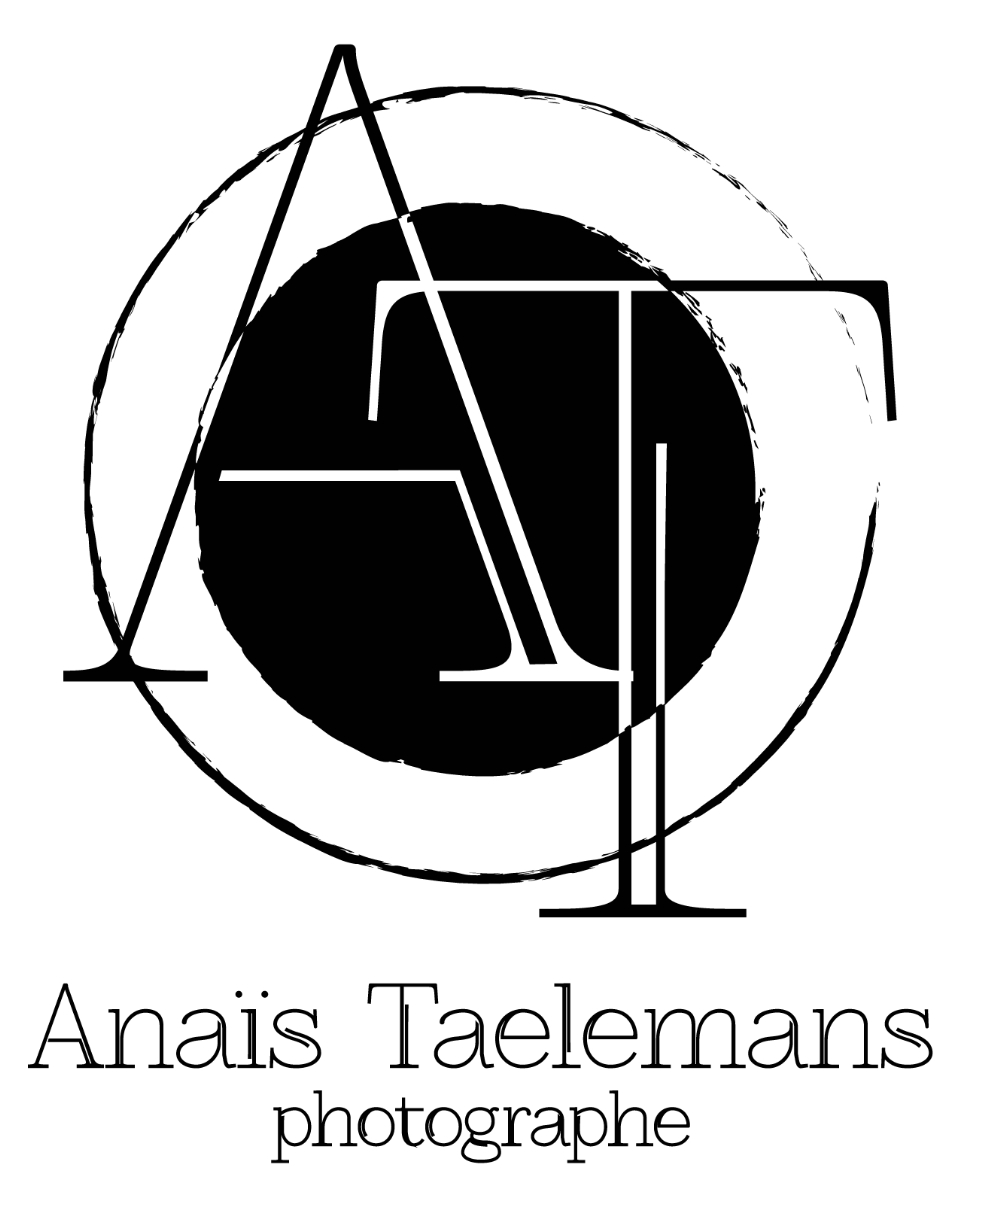 Anaïs Taelemans